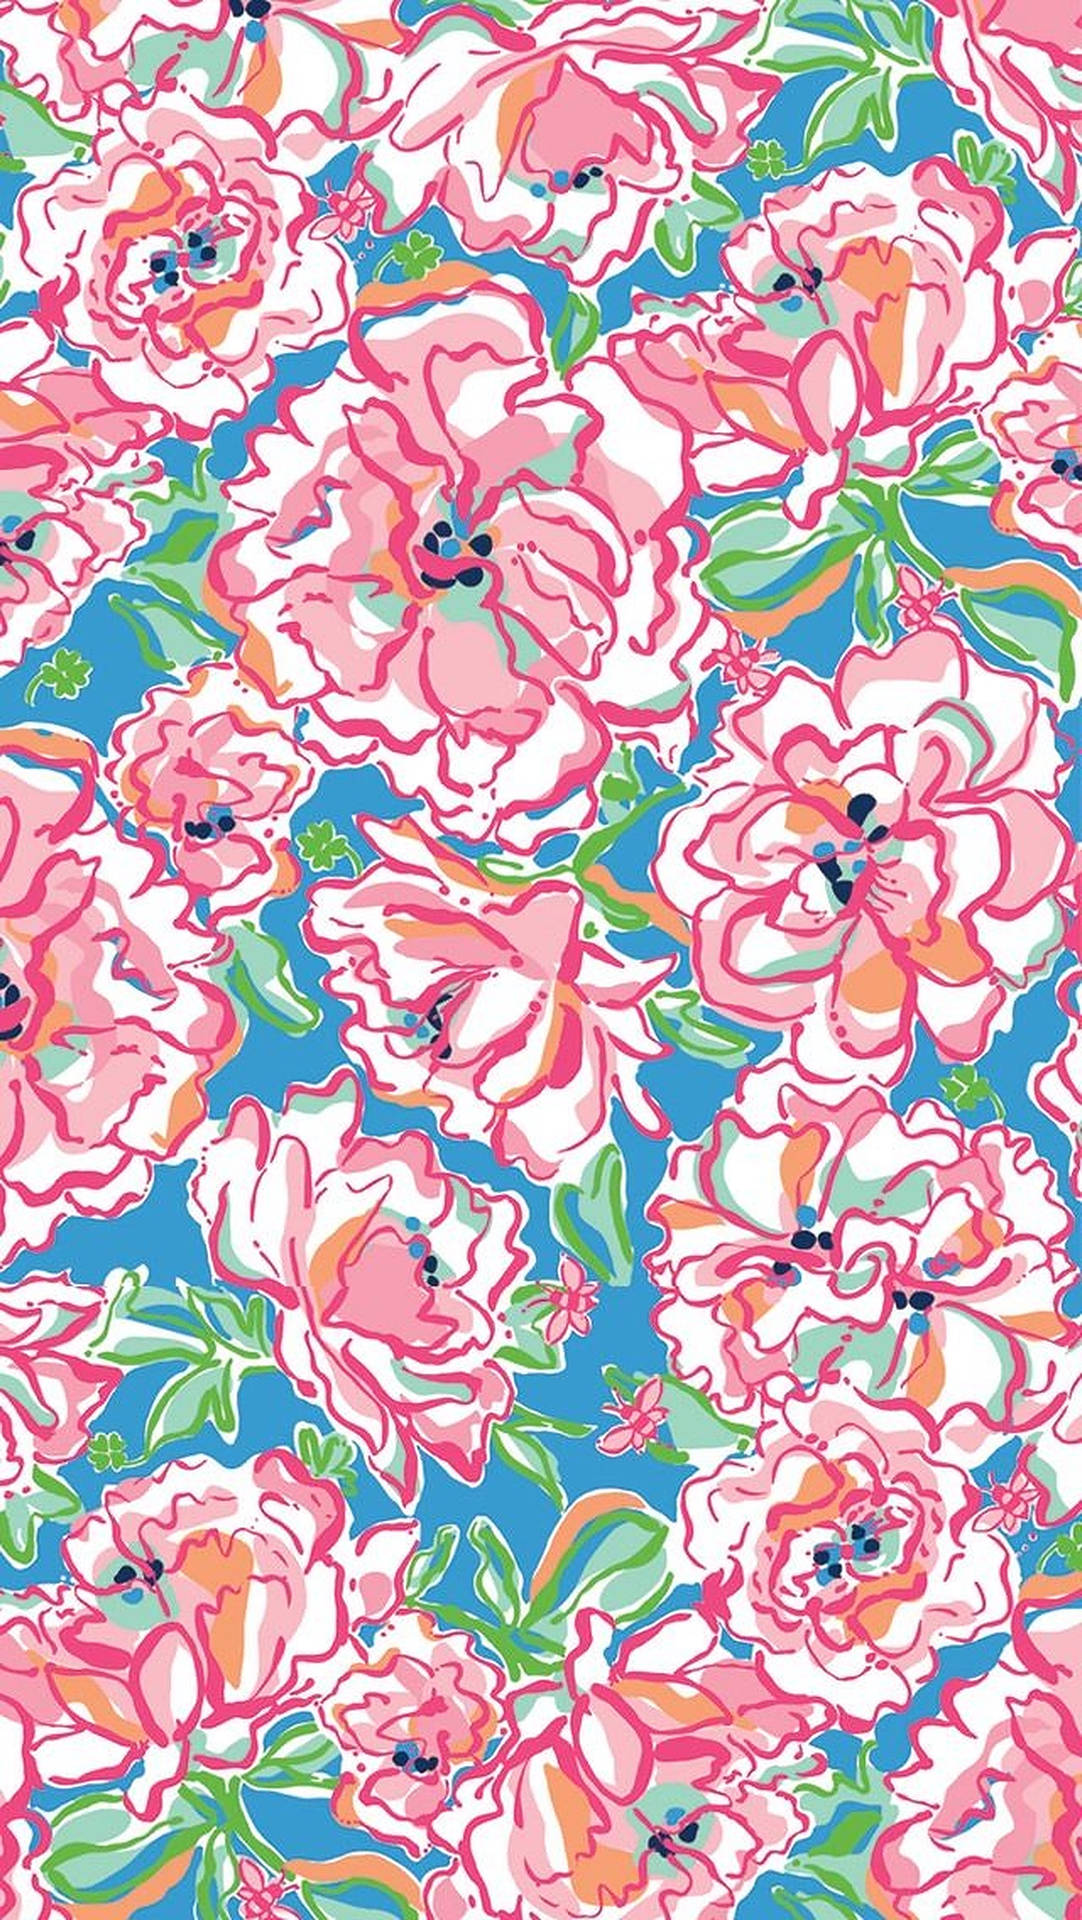 Lilly Pulitzer Pink Carnation Wallpaper